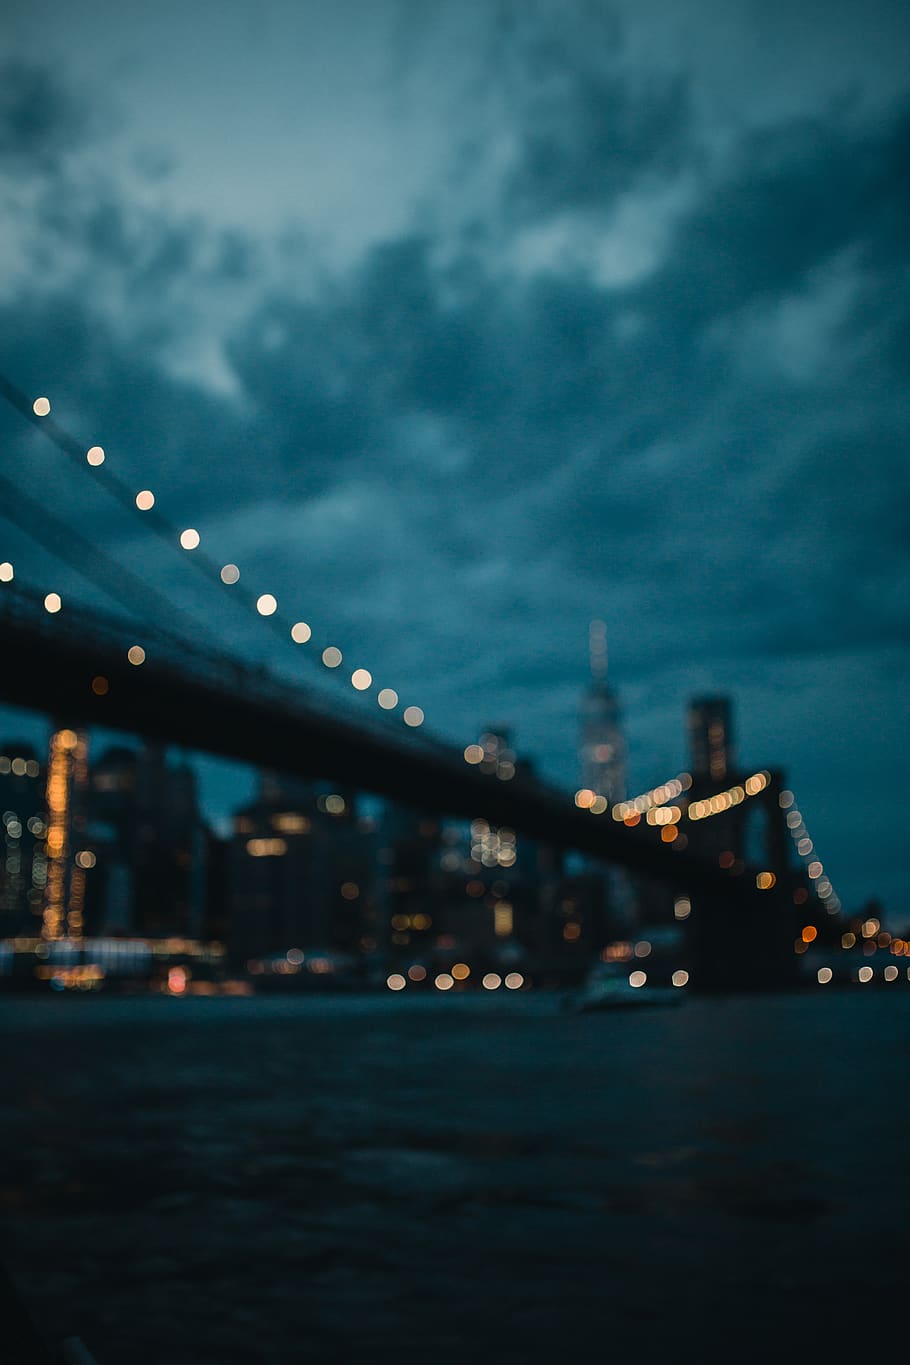 Brooklyn Bridge, architecture, blurred, blurry, buildings, city